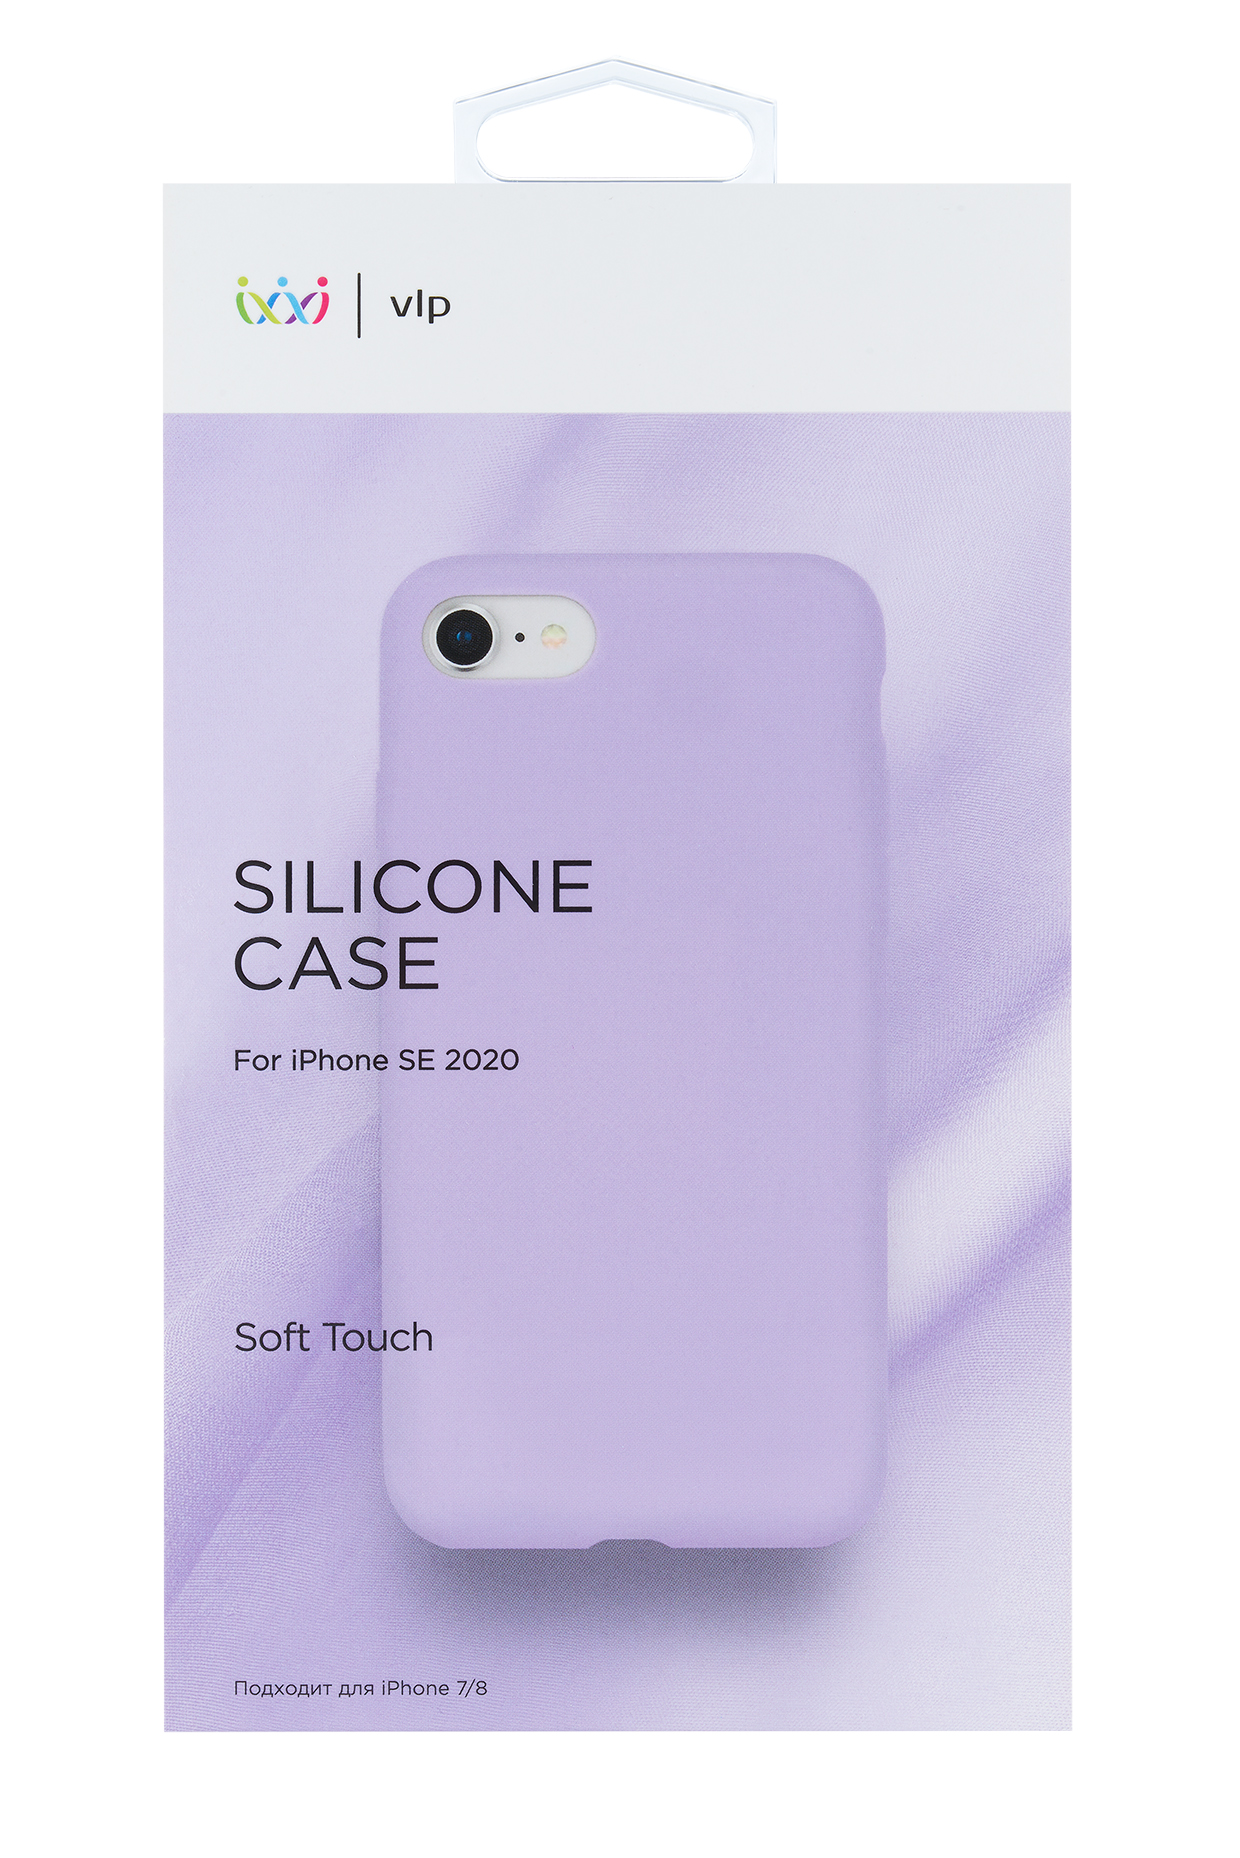 цена Чехол защитный VLP Silicone Сase для iPhone SE 2020, фиолетовый